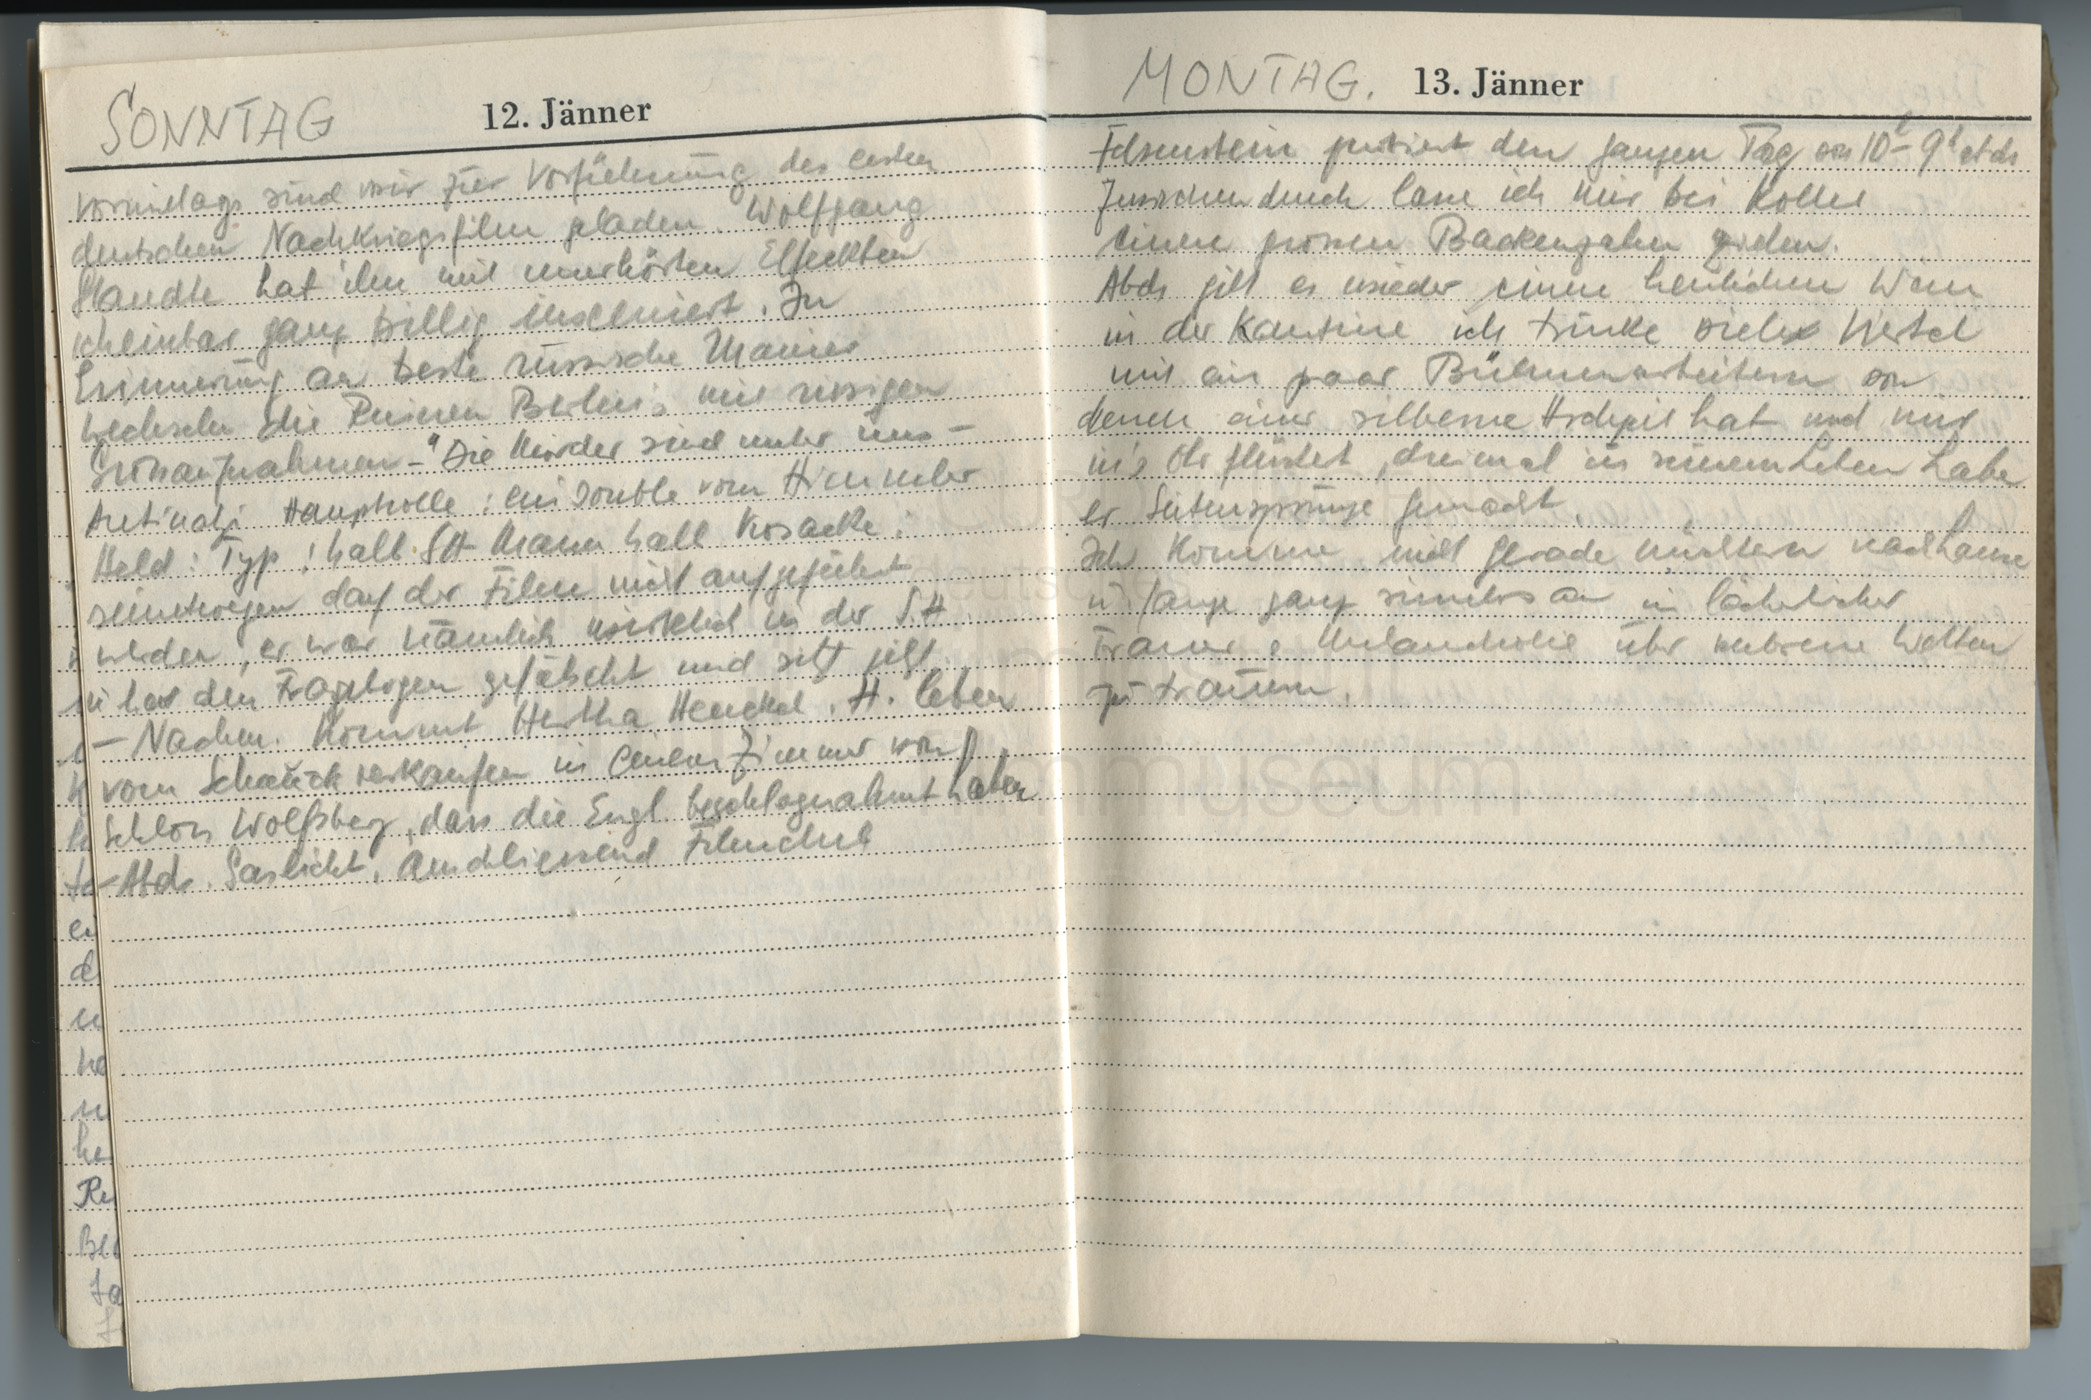 Tagebucheintrag vom 12.1.1947